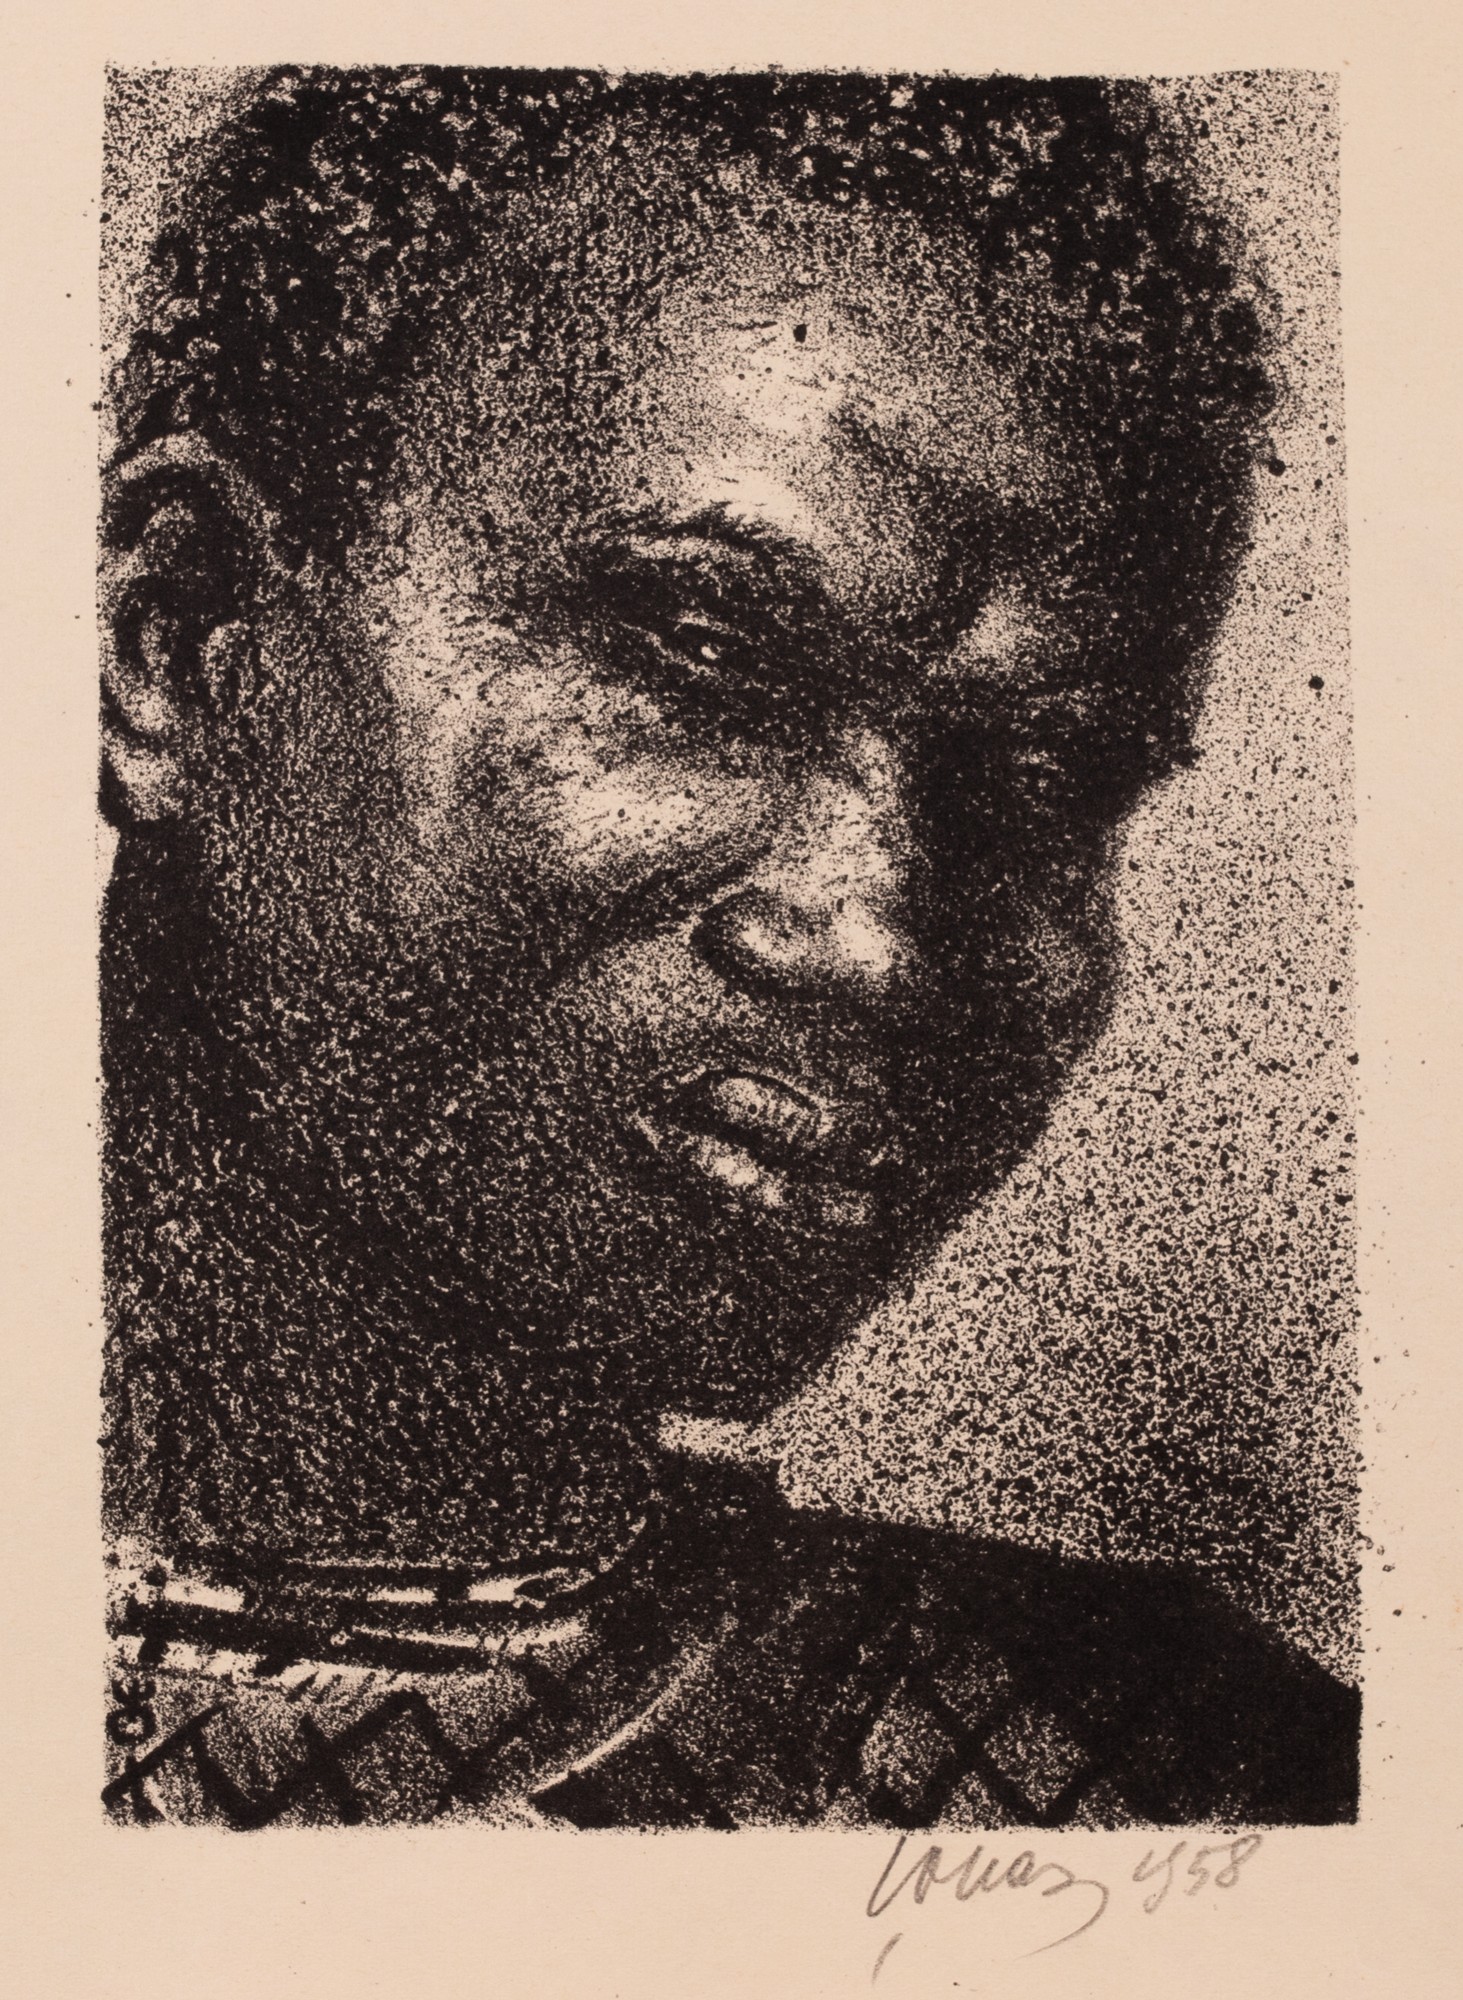 Evald Okas "Portrait of a Black Man"